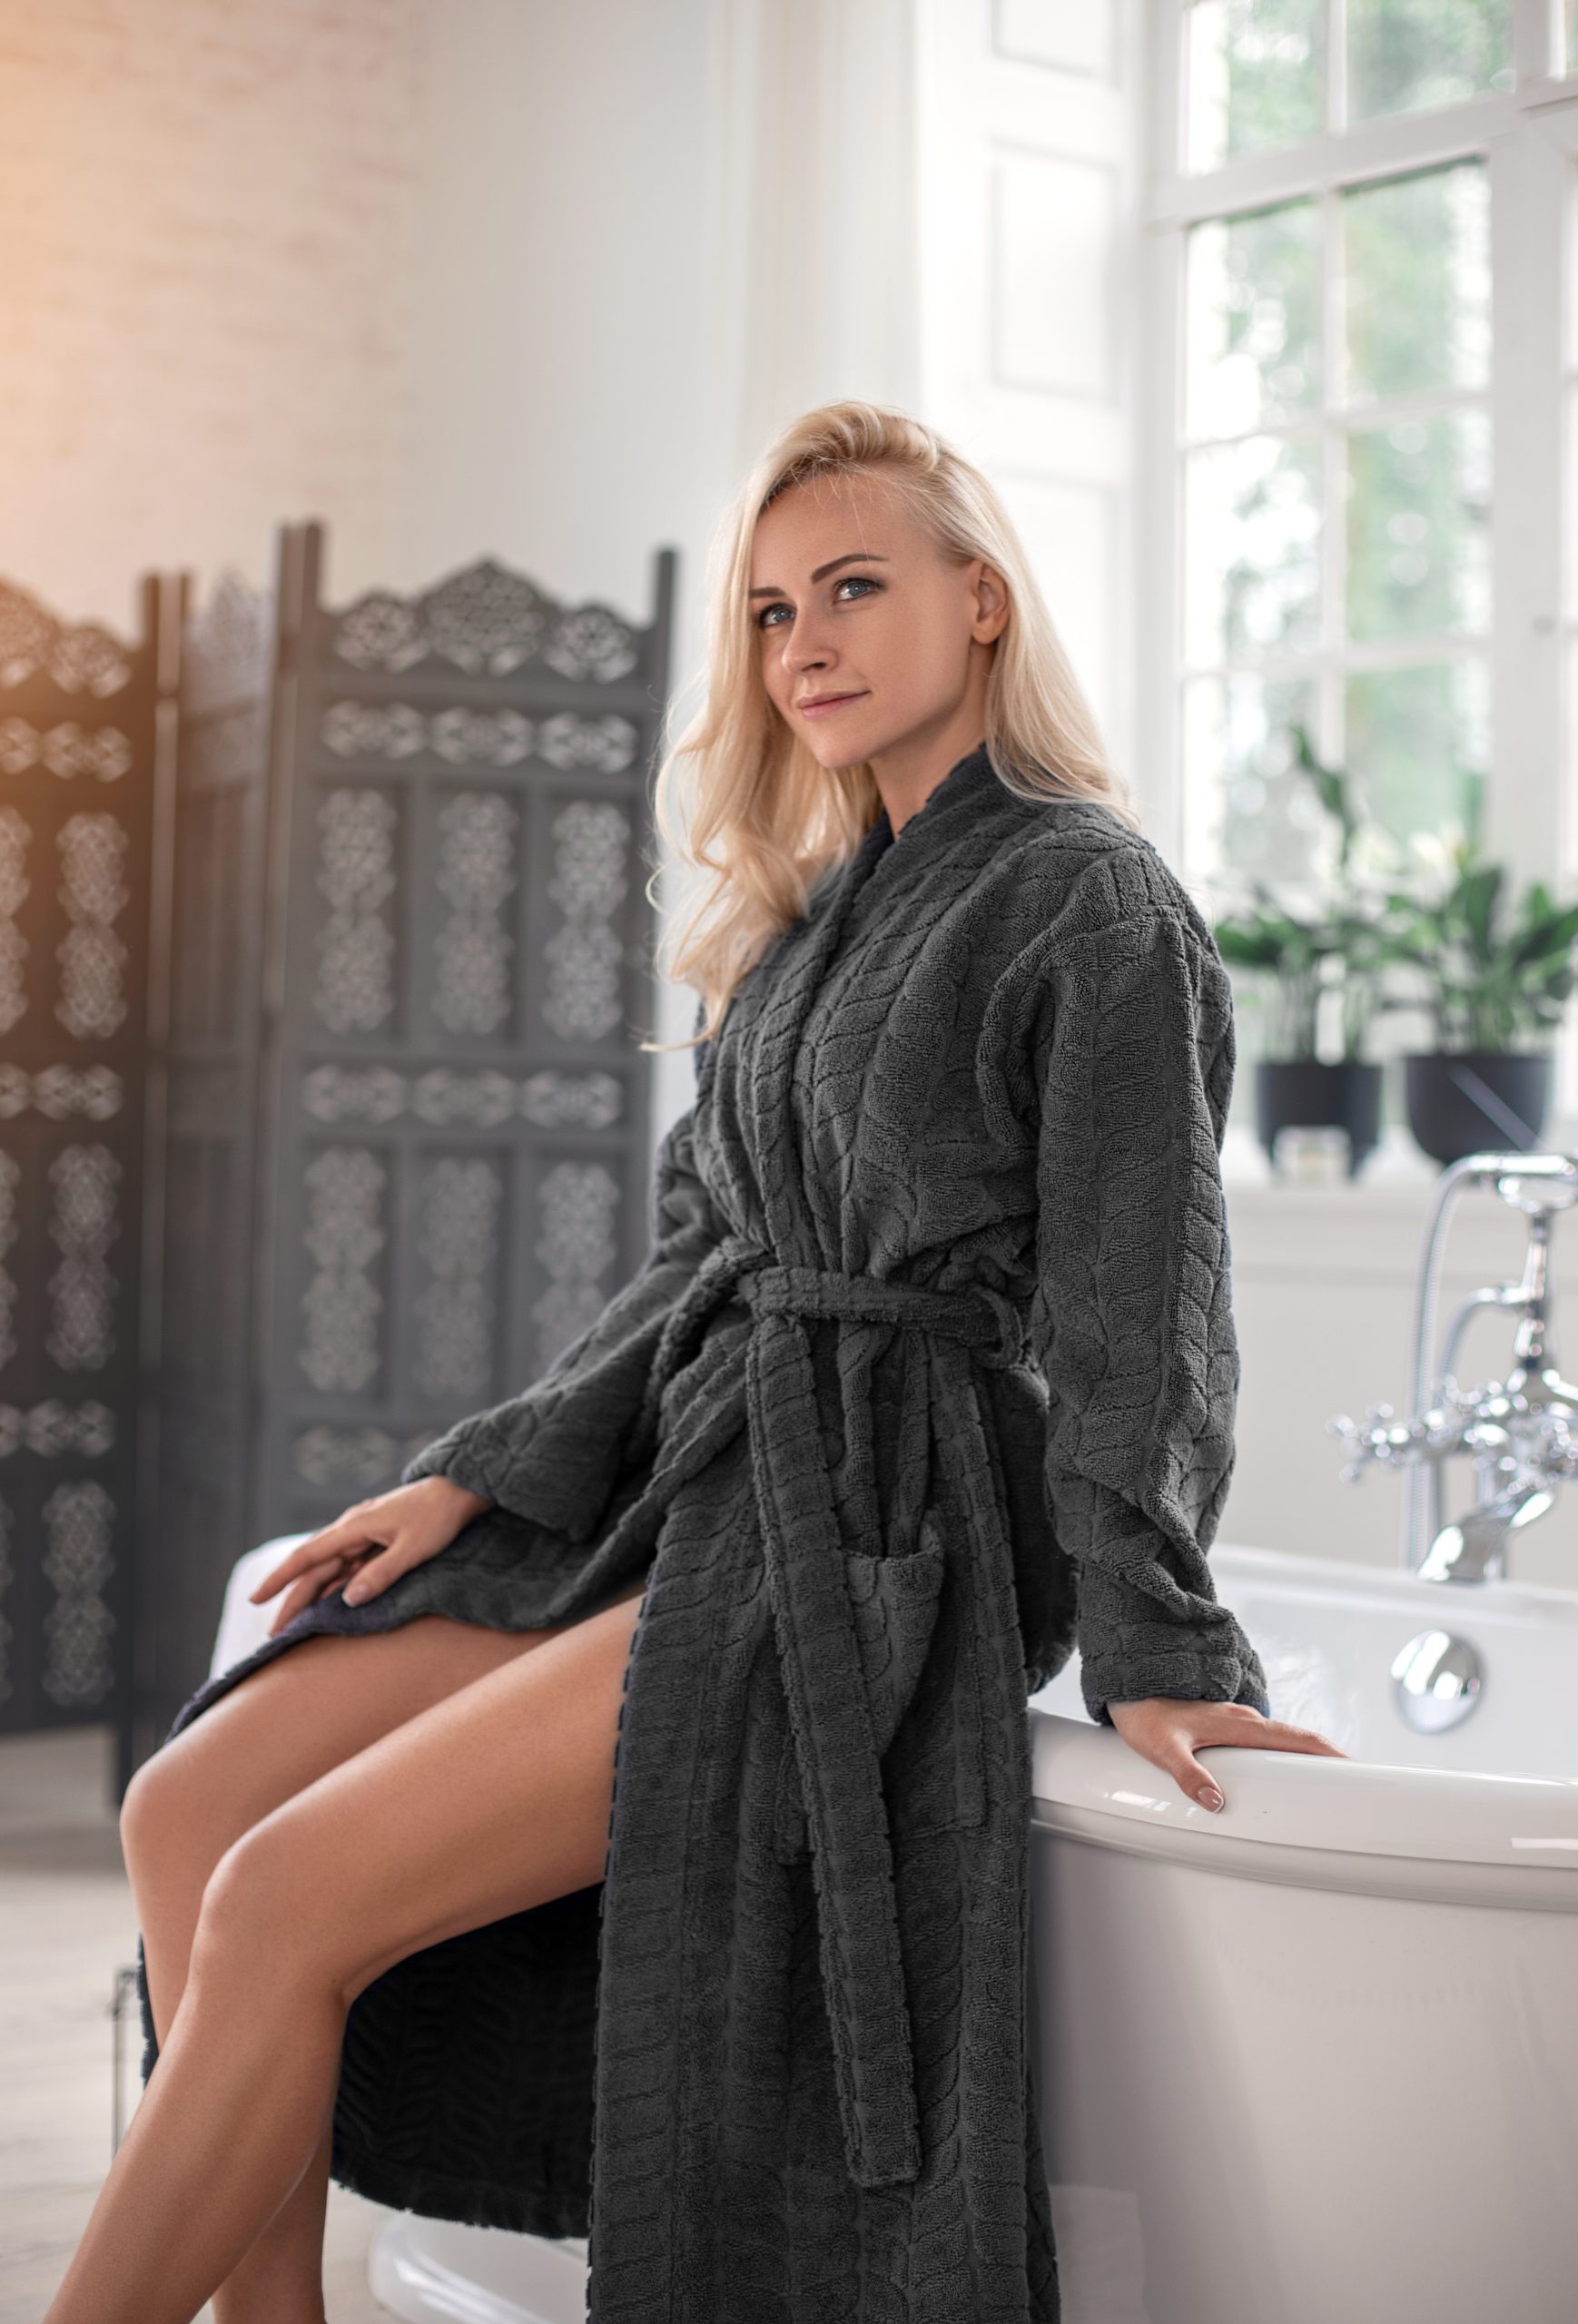 Robe - Products Luxury Milano Jacquard Bagno